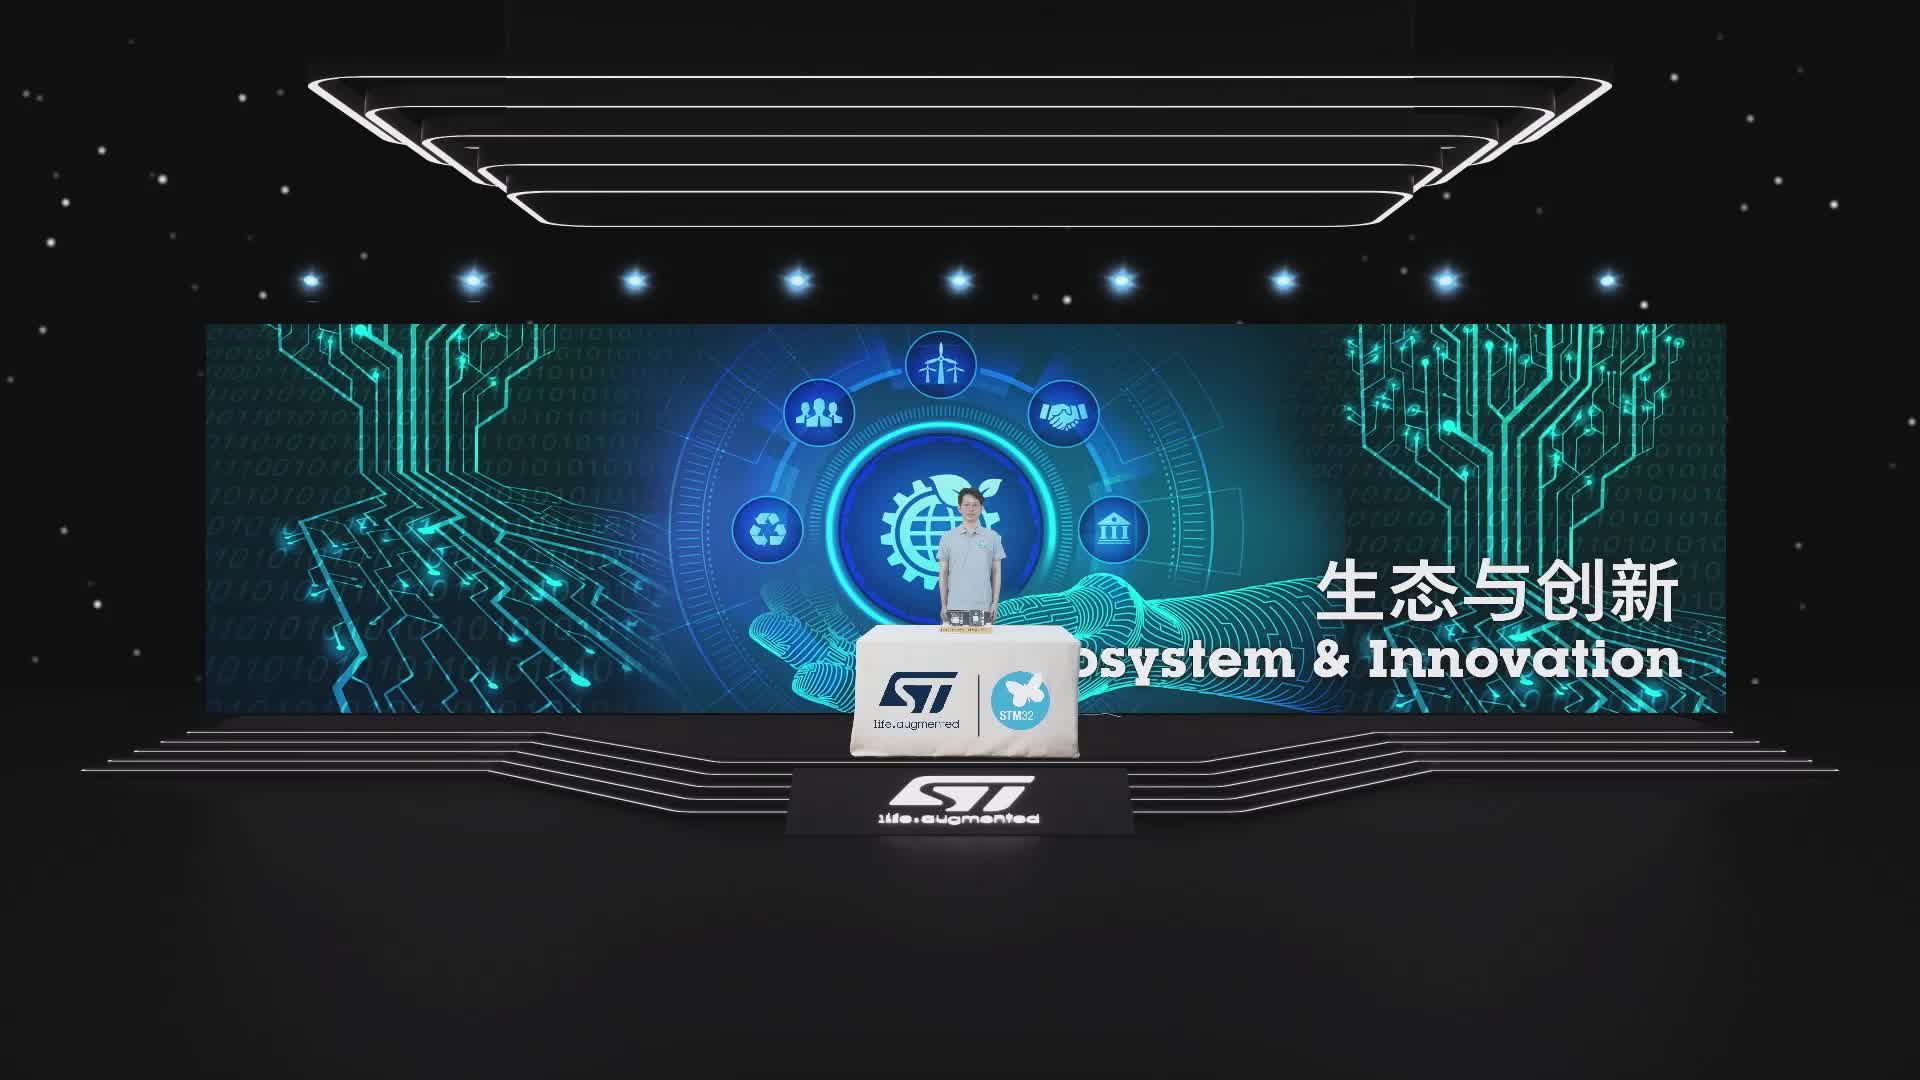 ST线上技术周，展示基于STM32MP157、STM32MP151系列处理器开发的核心板及开发板